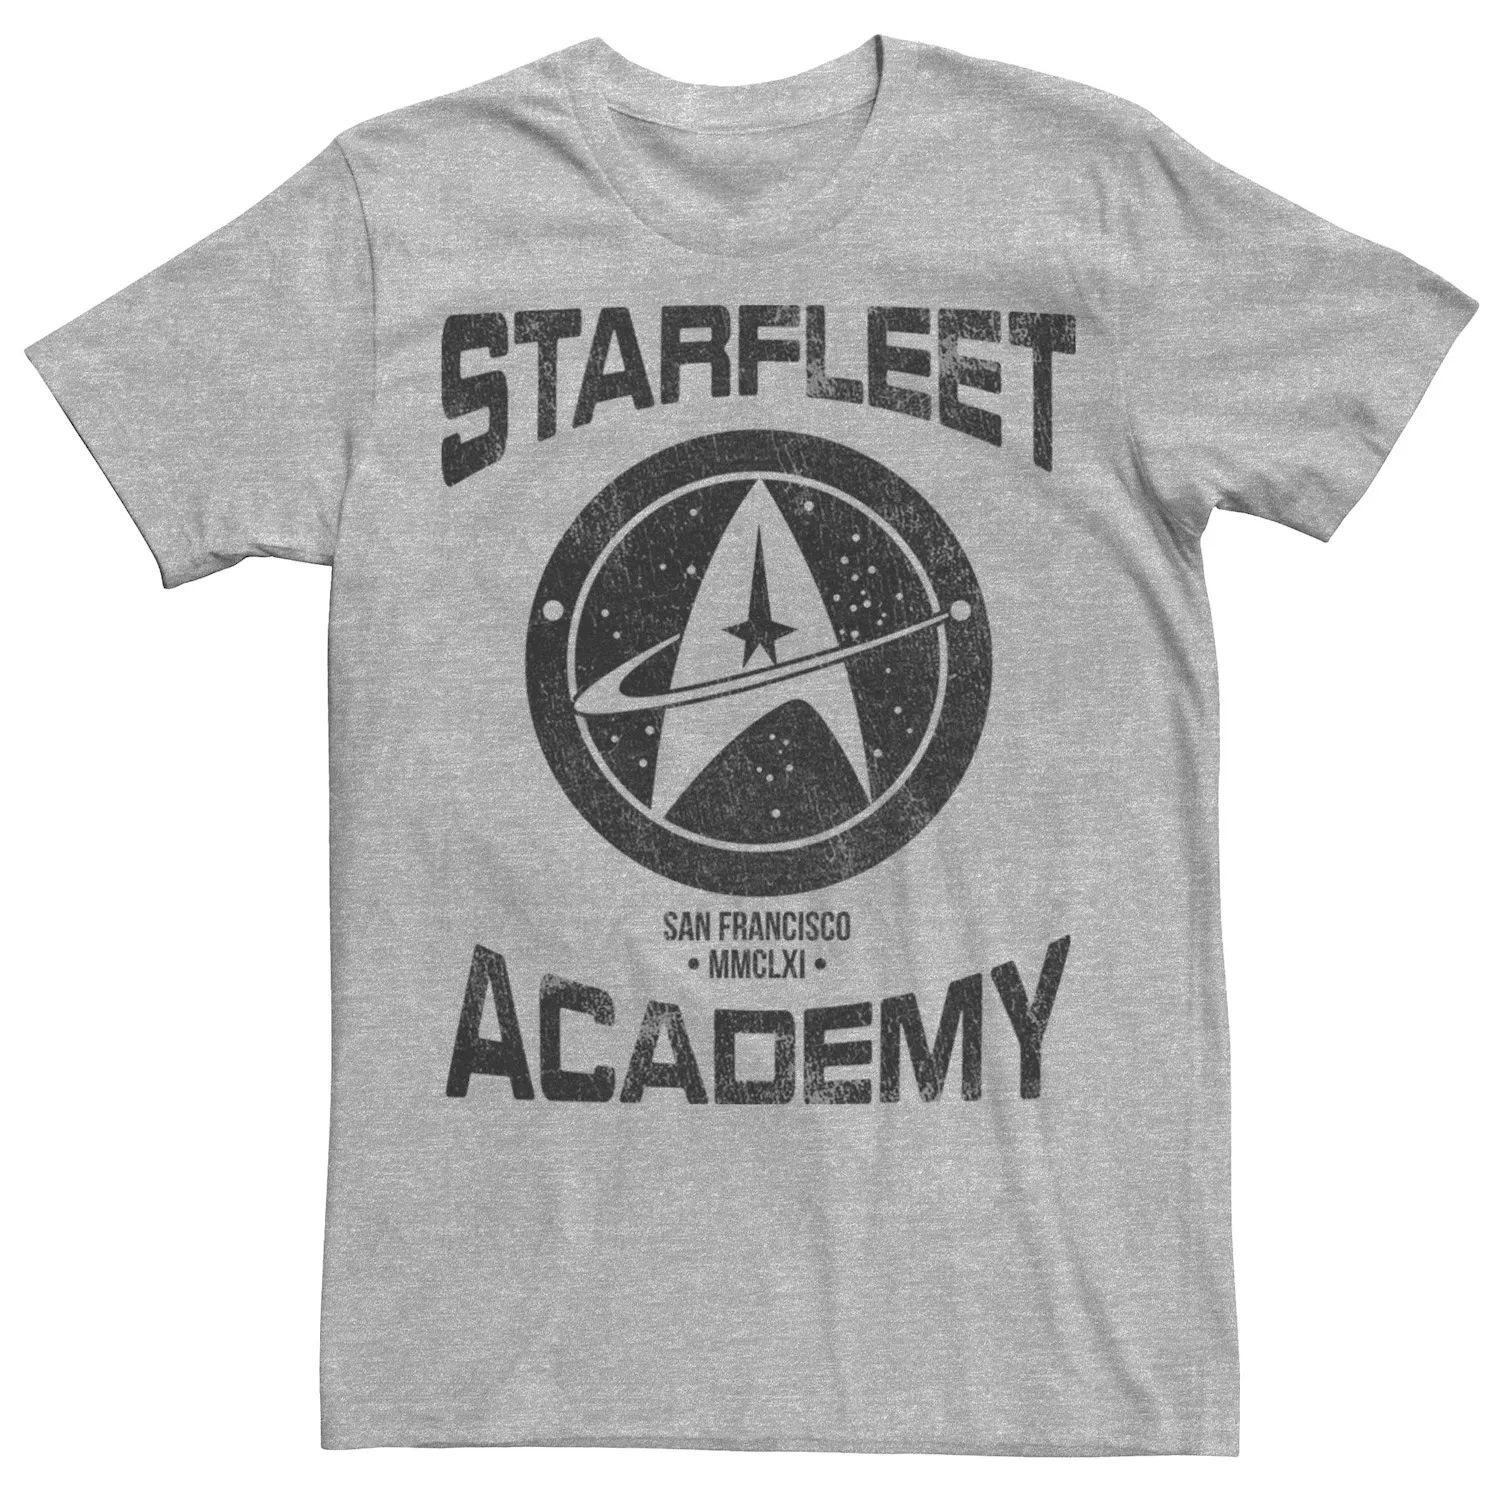 Мужская футболка с эмблемой Дельты Star Trek Starfleet Academy Licensed Character